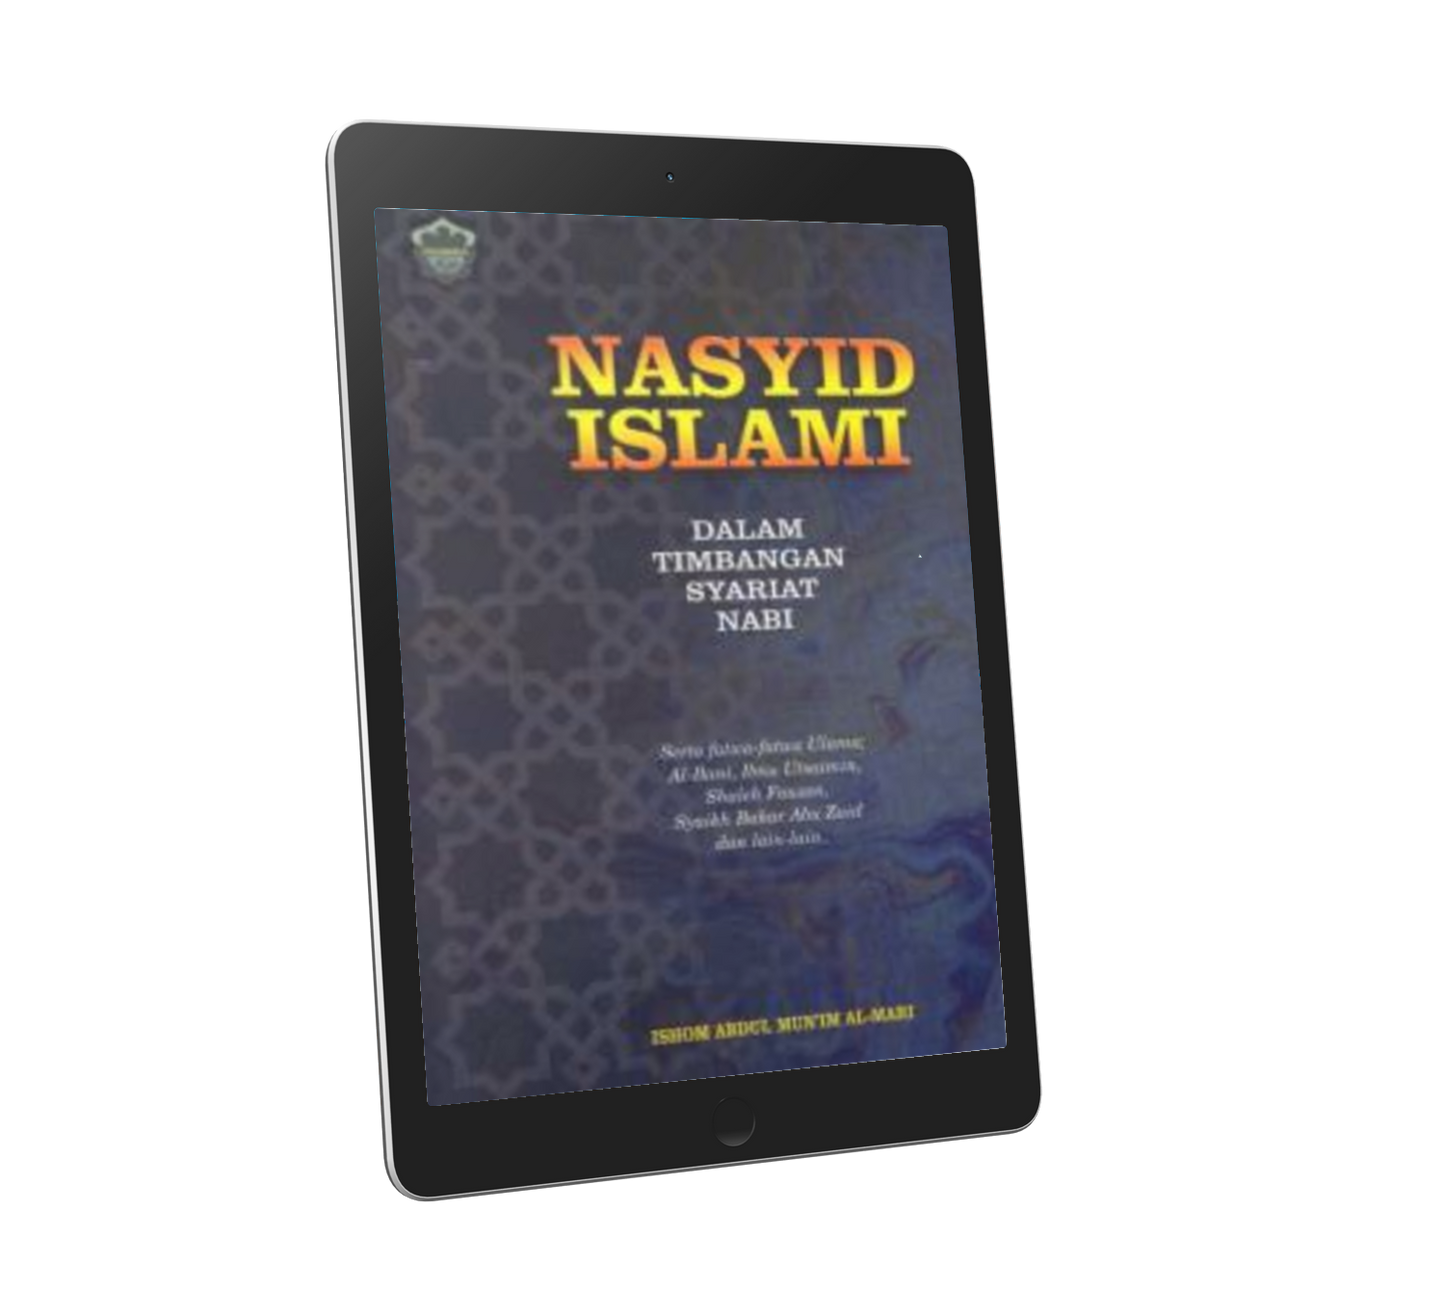 Nasyid Islami